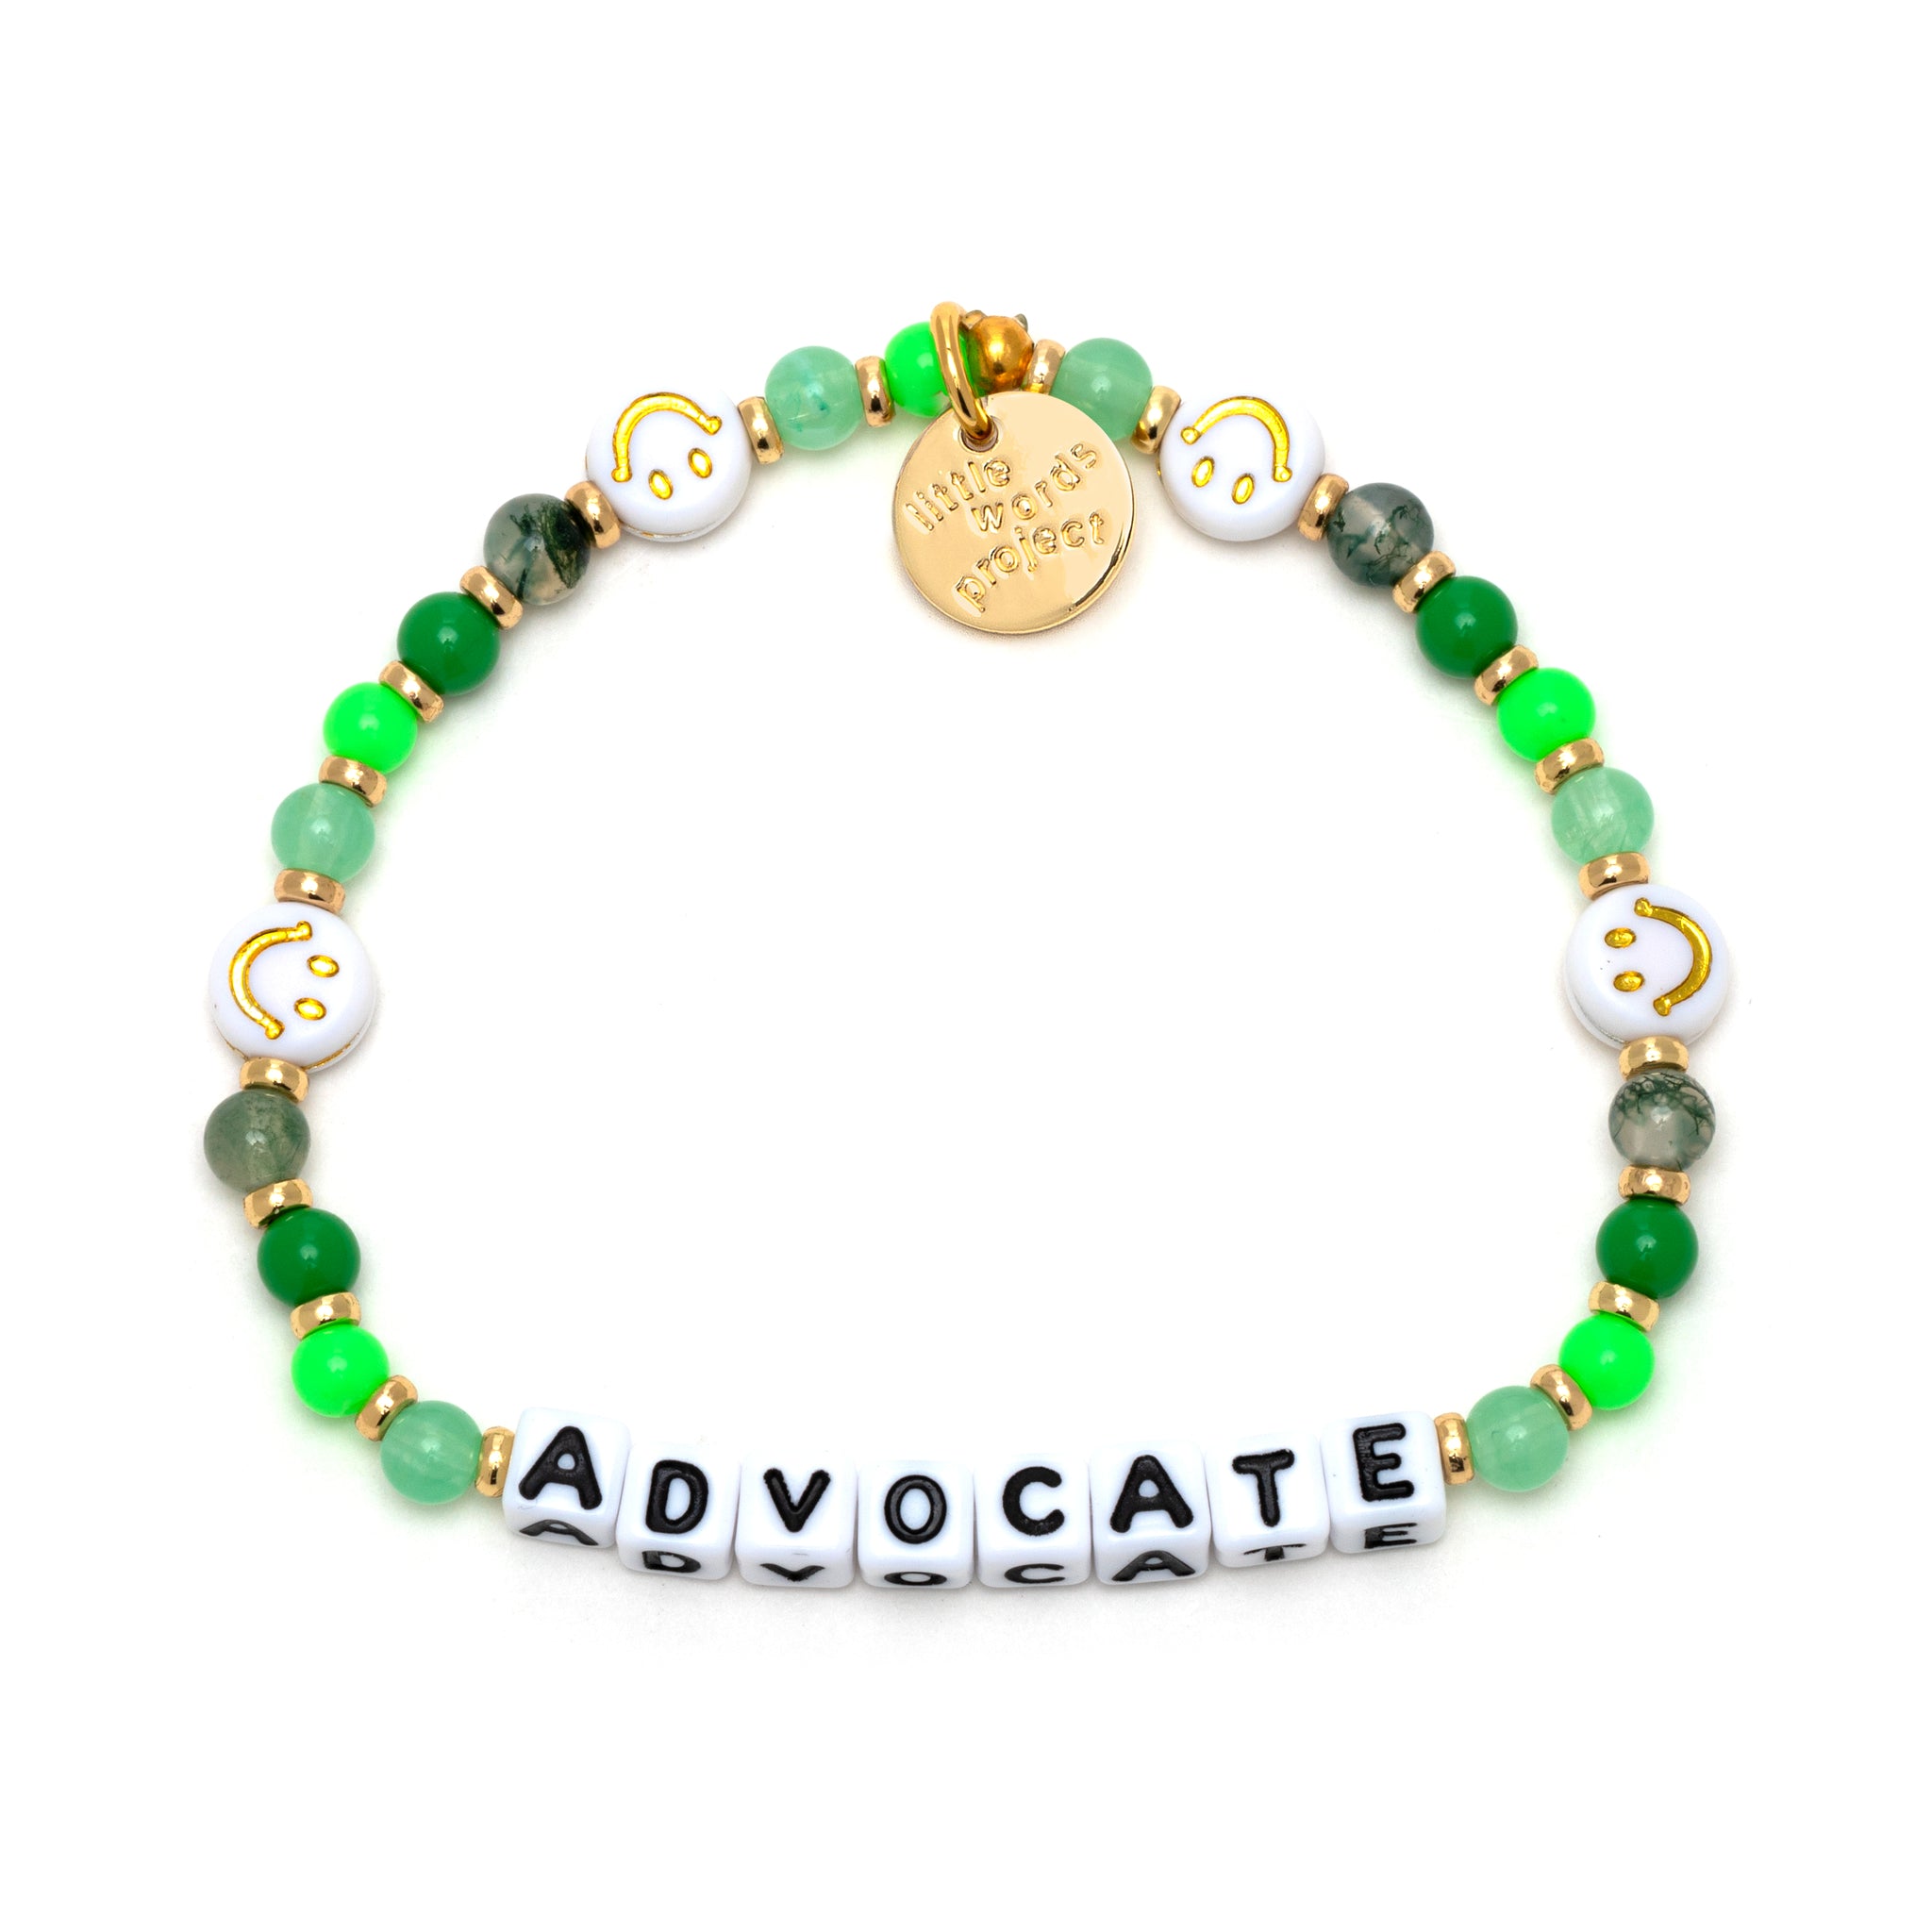 Advocate Student Athlete Mental Health Bracelet - Little Words Project